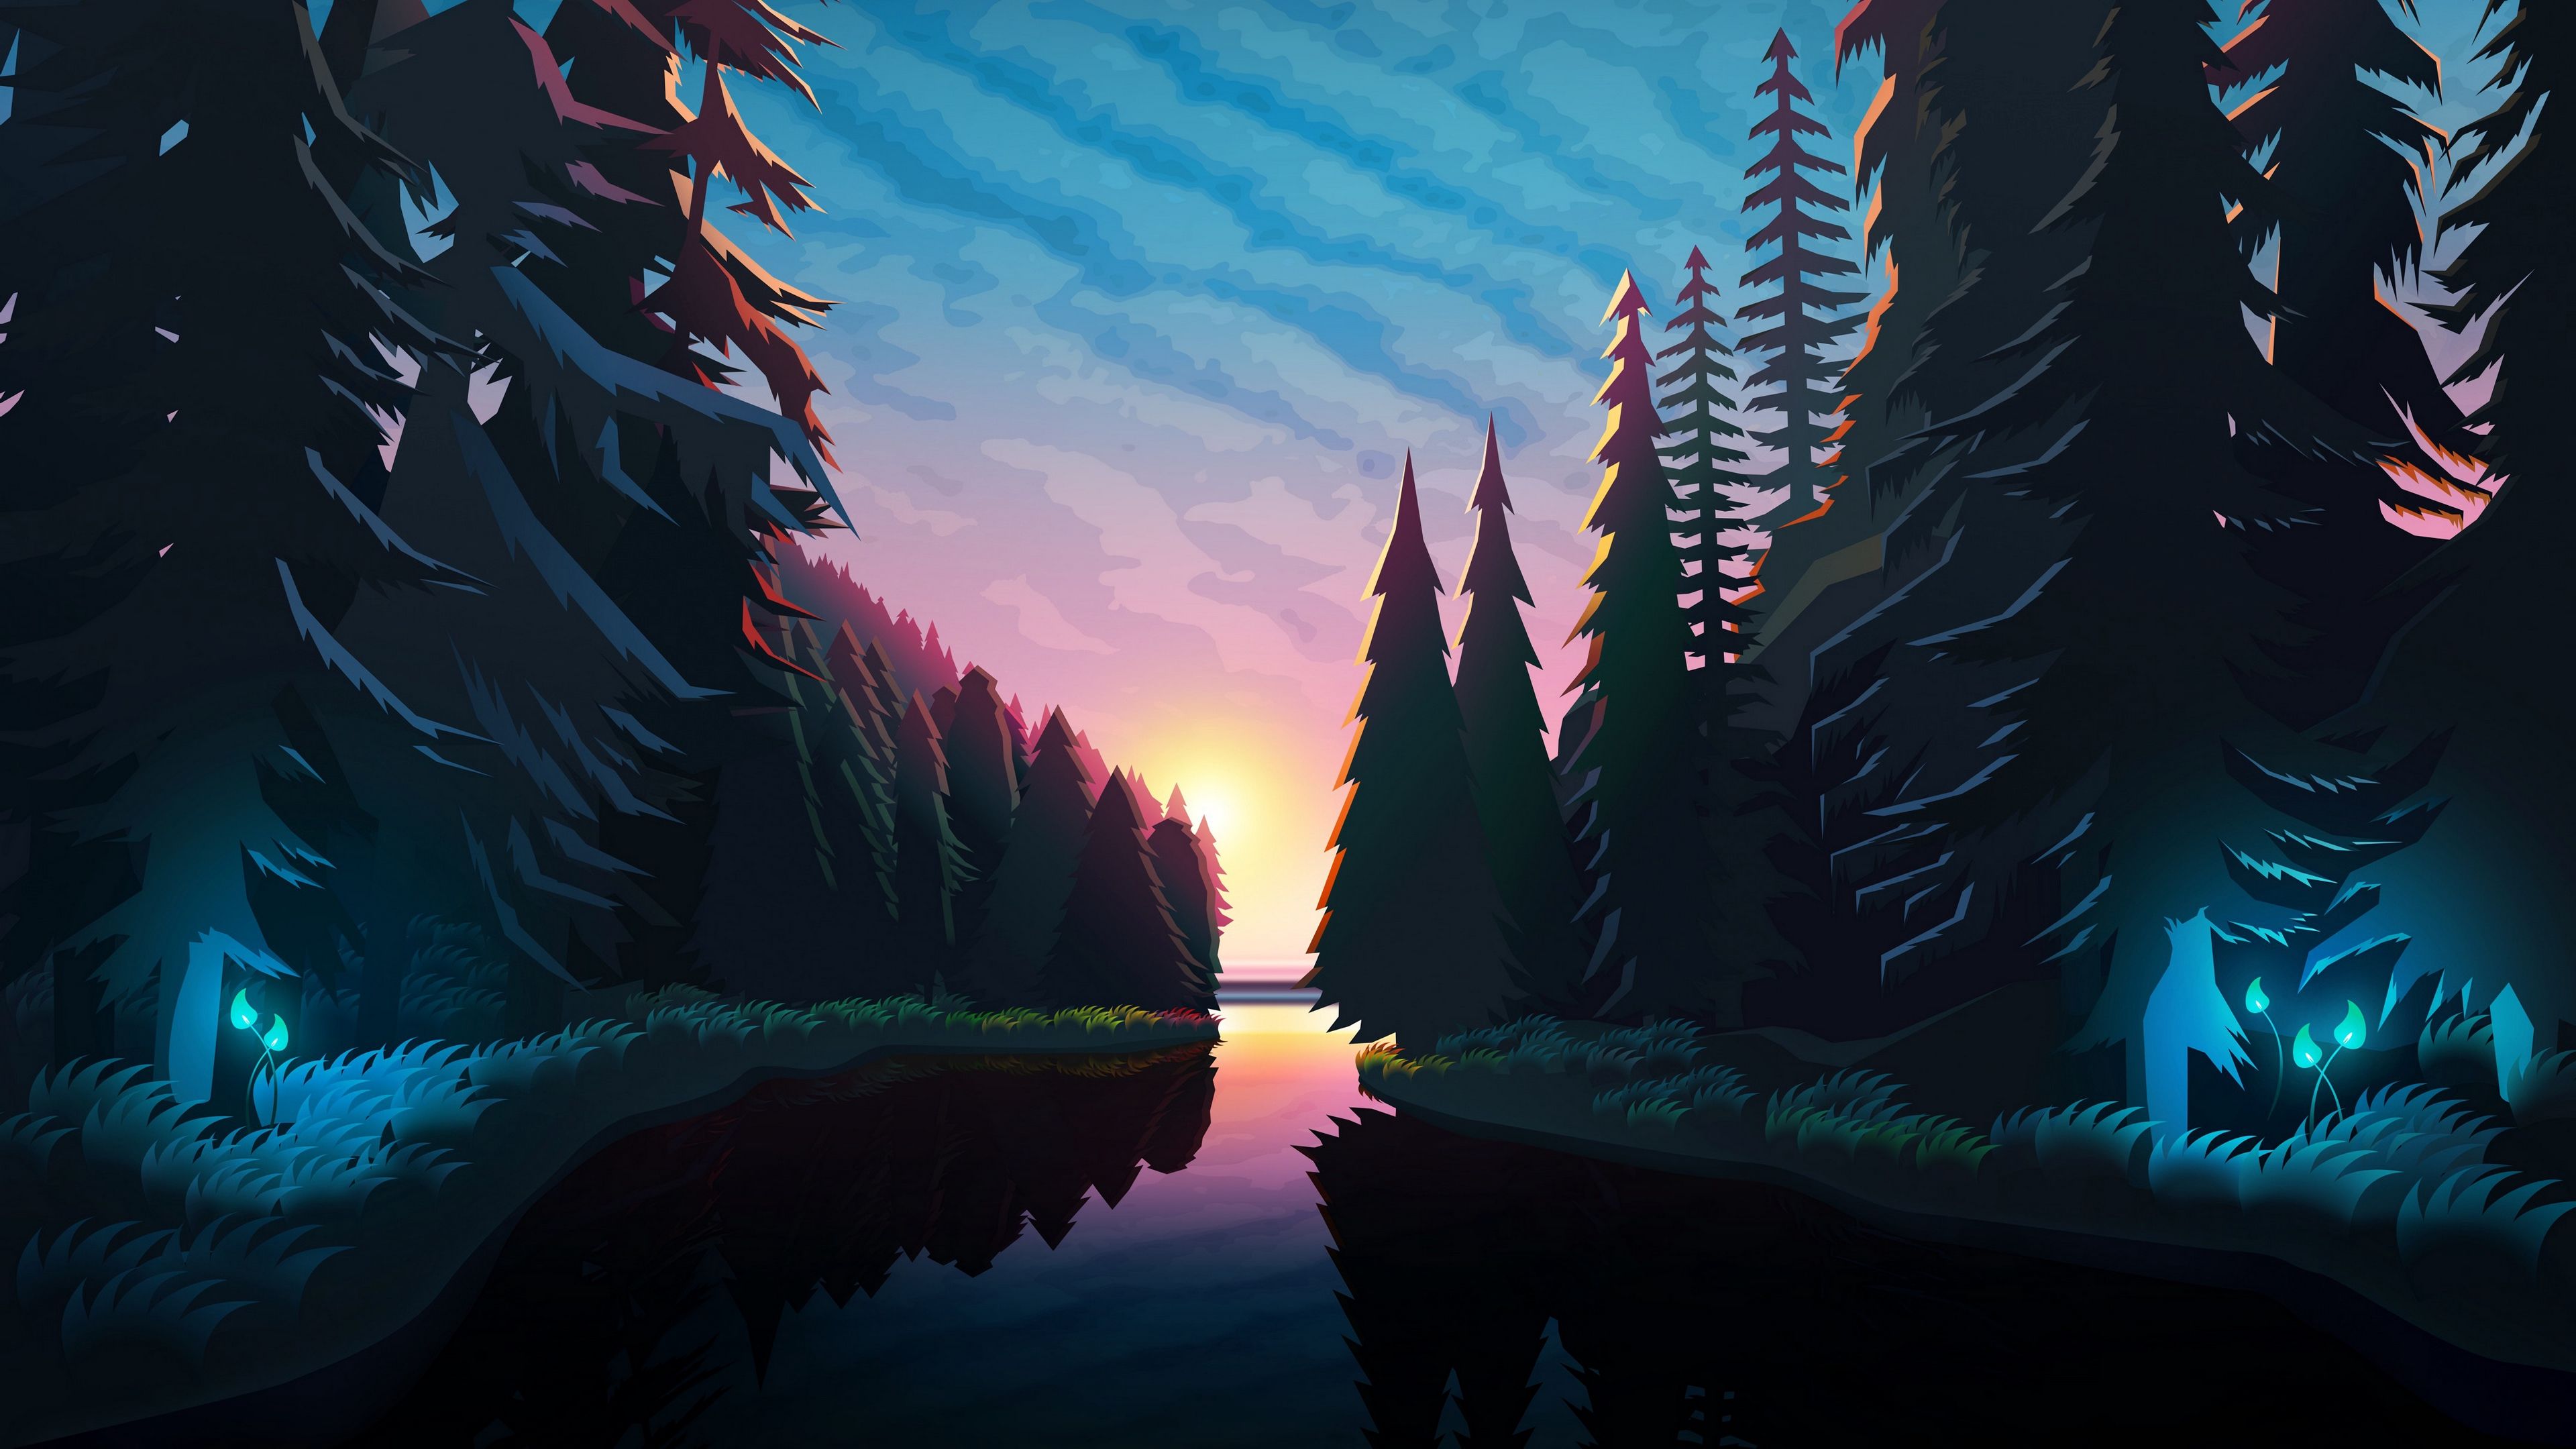 Animated Landscape Wallpapers 4k, HD Animated Landscape Backgrounds